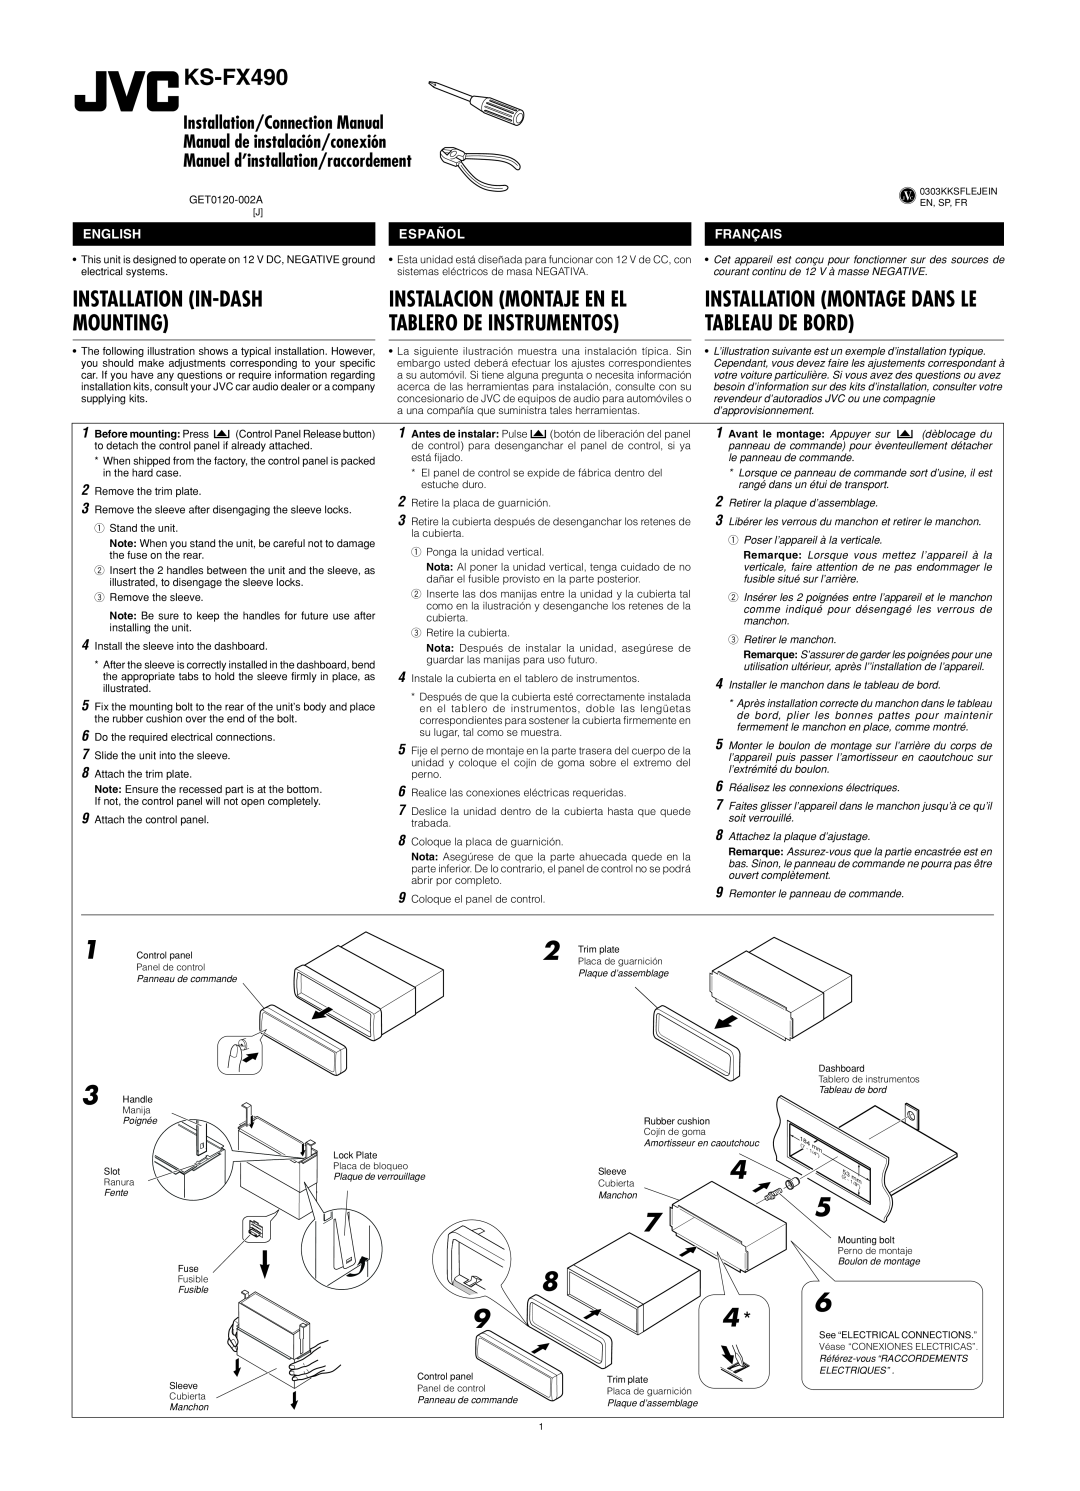 JVC KS-FX490 manual Installation In-Dash, Mounting, Tableau De Bord, English, Français, Tablero De Instrumentos 